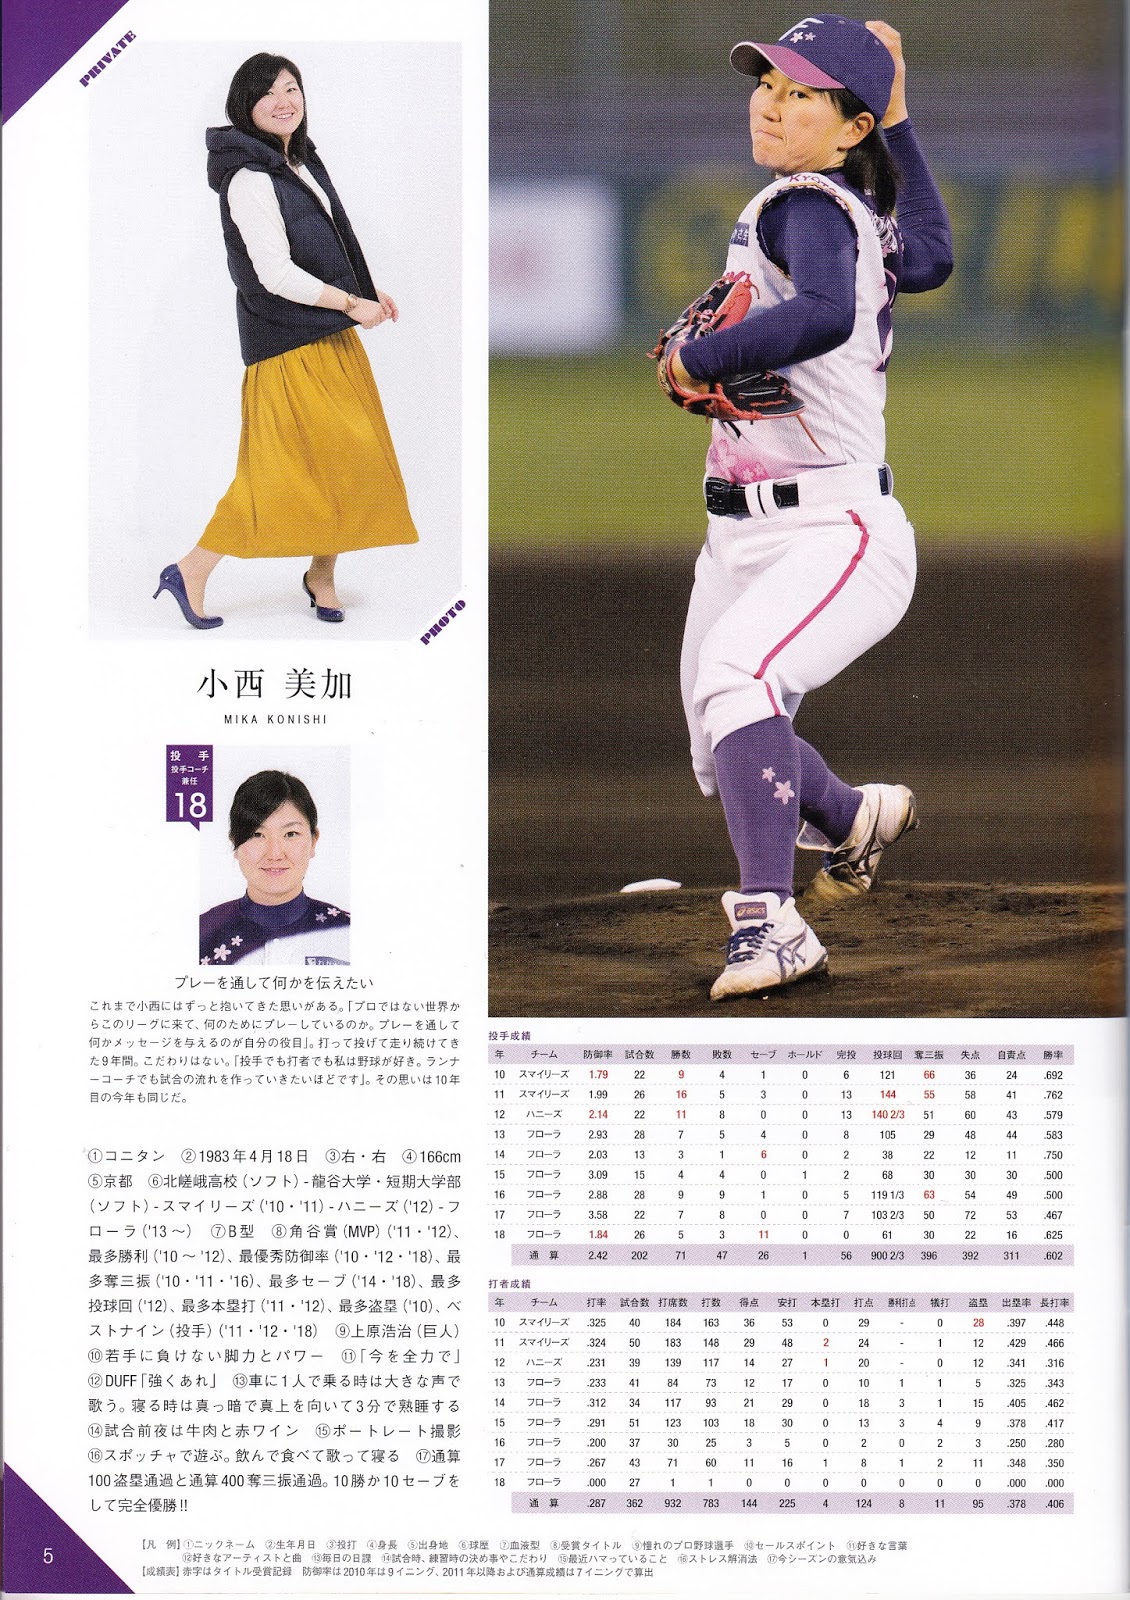 Calendar Shohei Ohtani (Hokkaido Nippon-Ham Fighters) fiscal 2018 calendar, Goods / Accessories